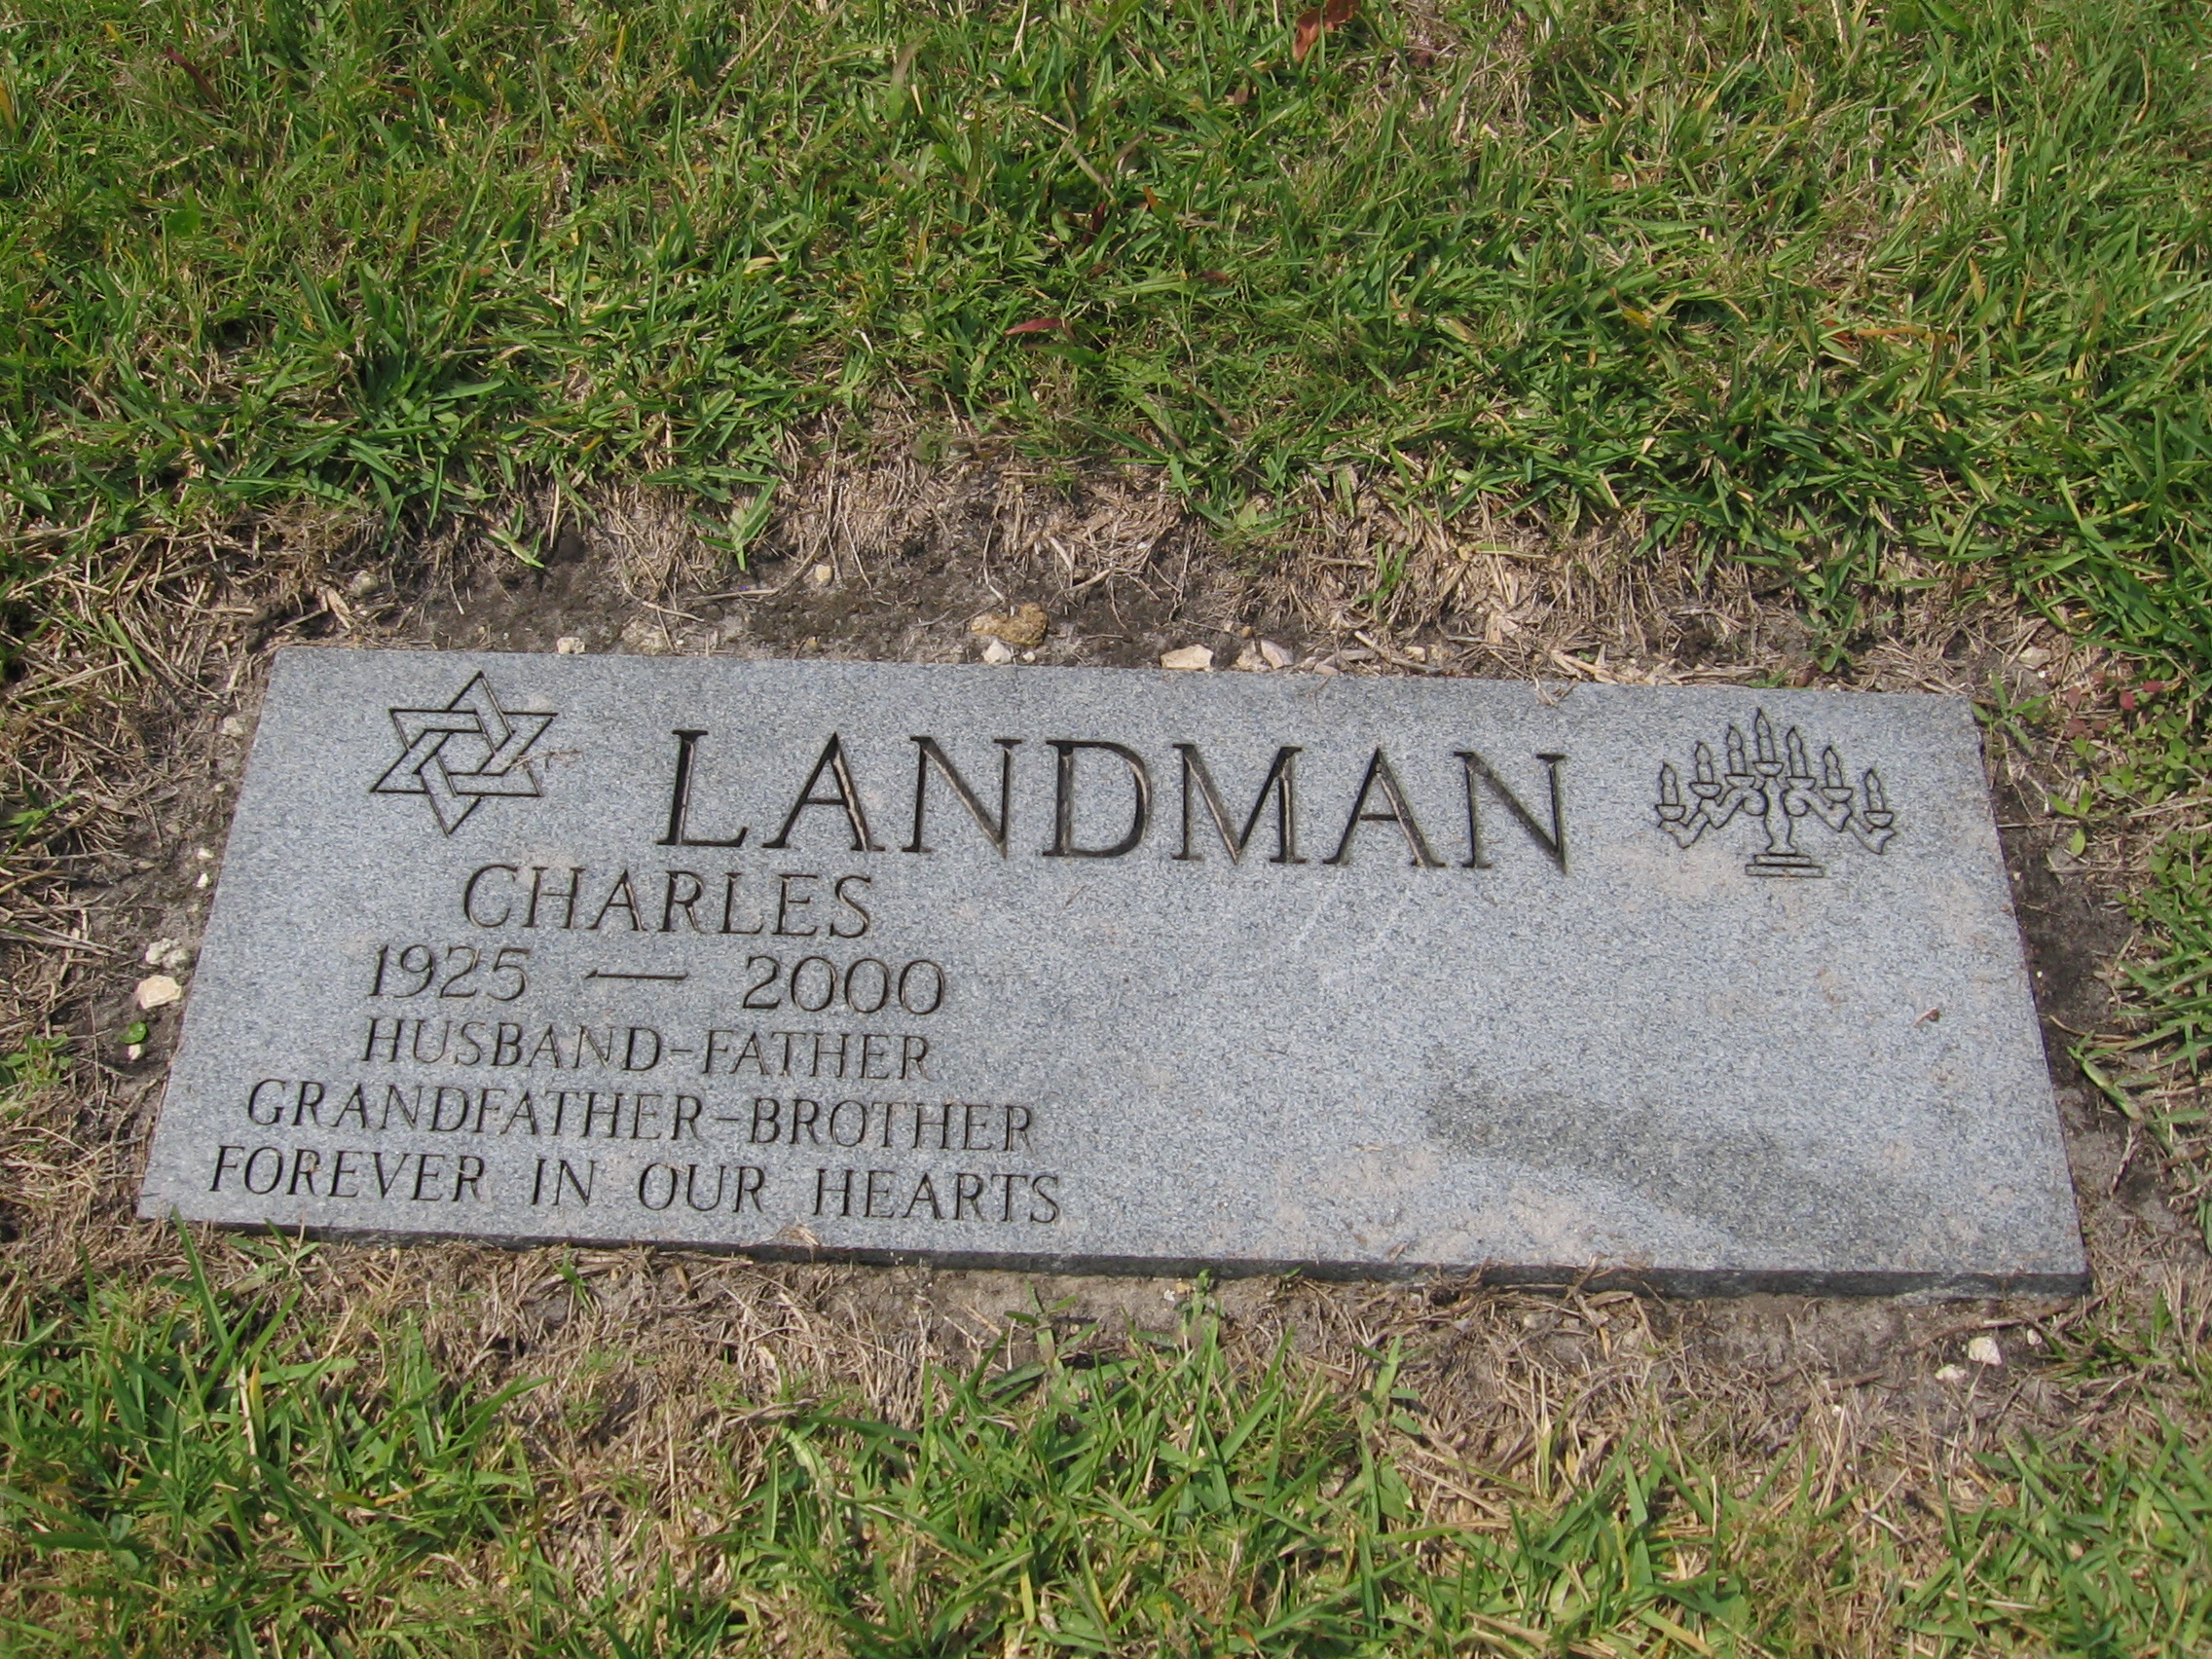 Charles Landman